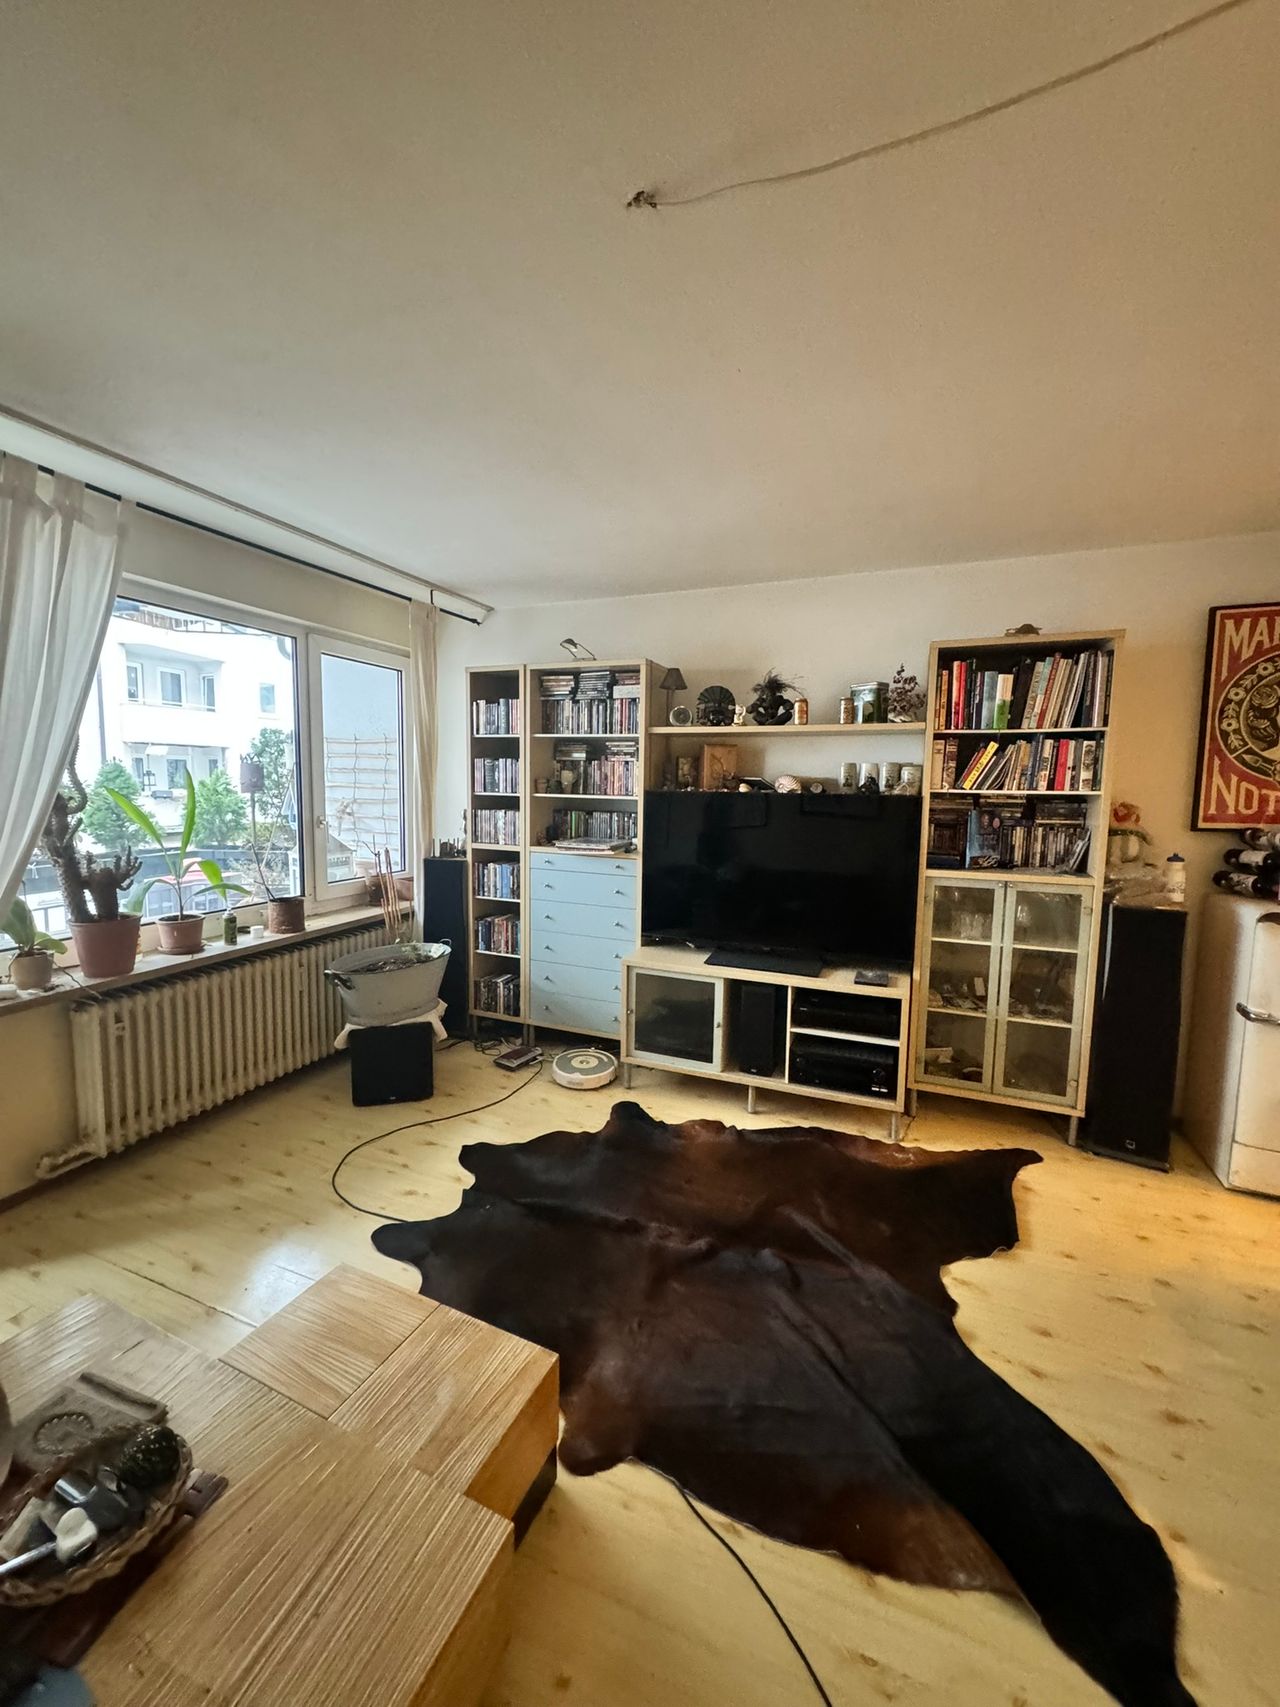 Modern, beautiful apartment in München